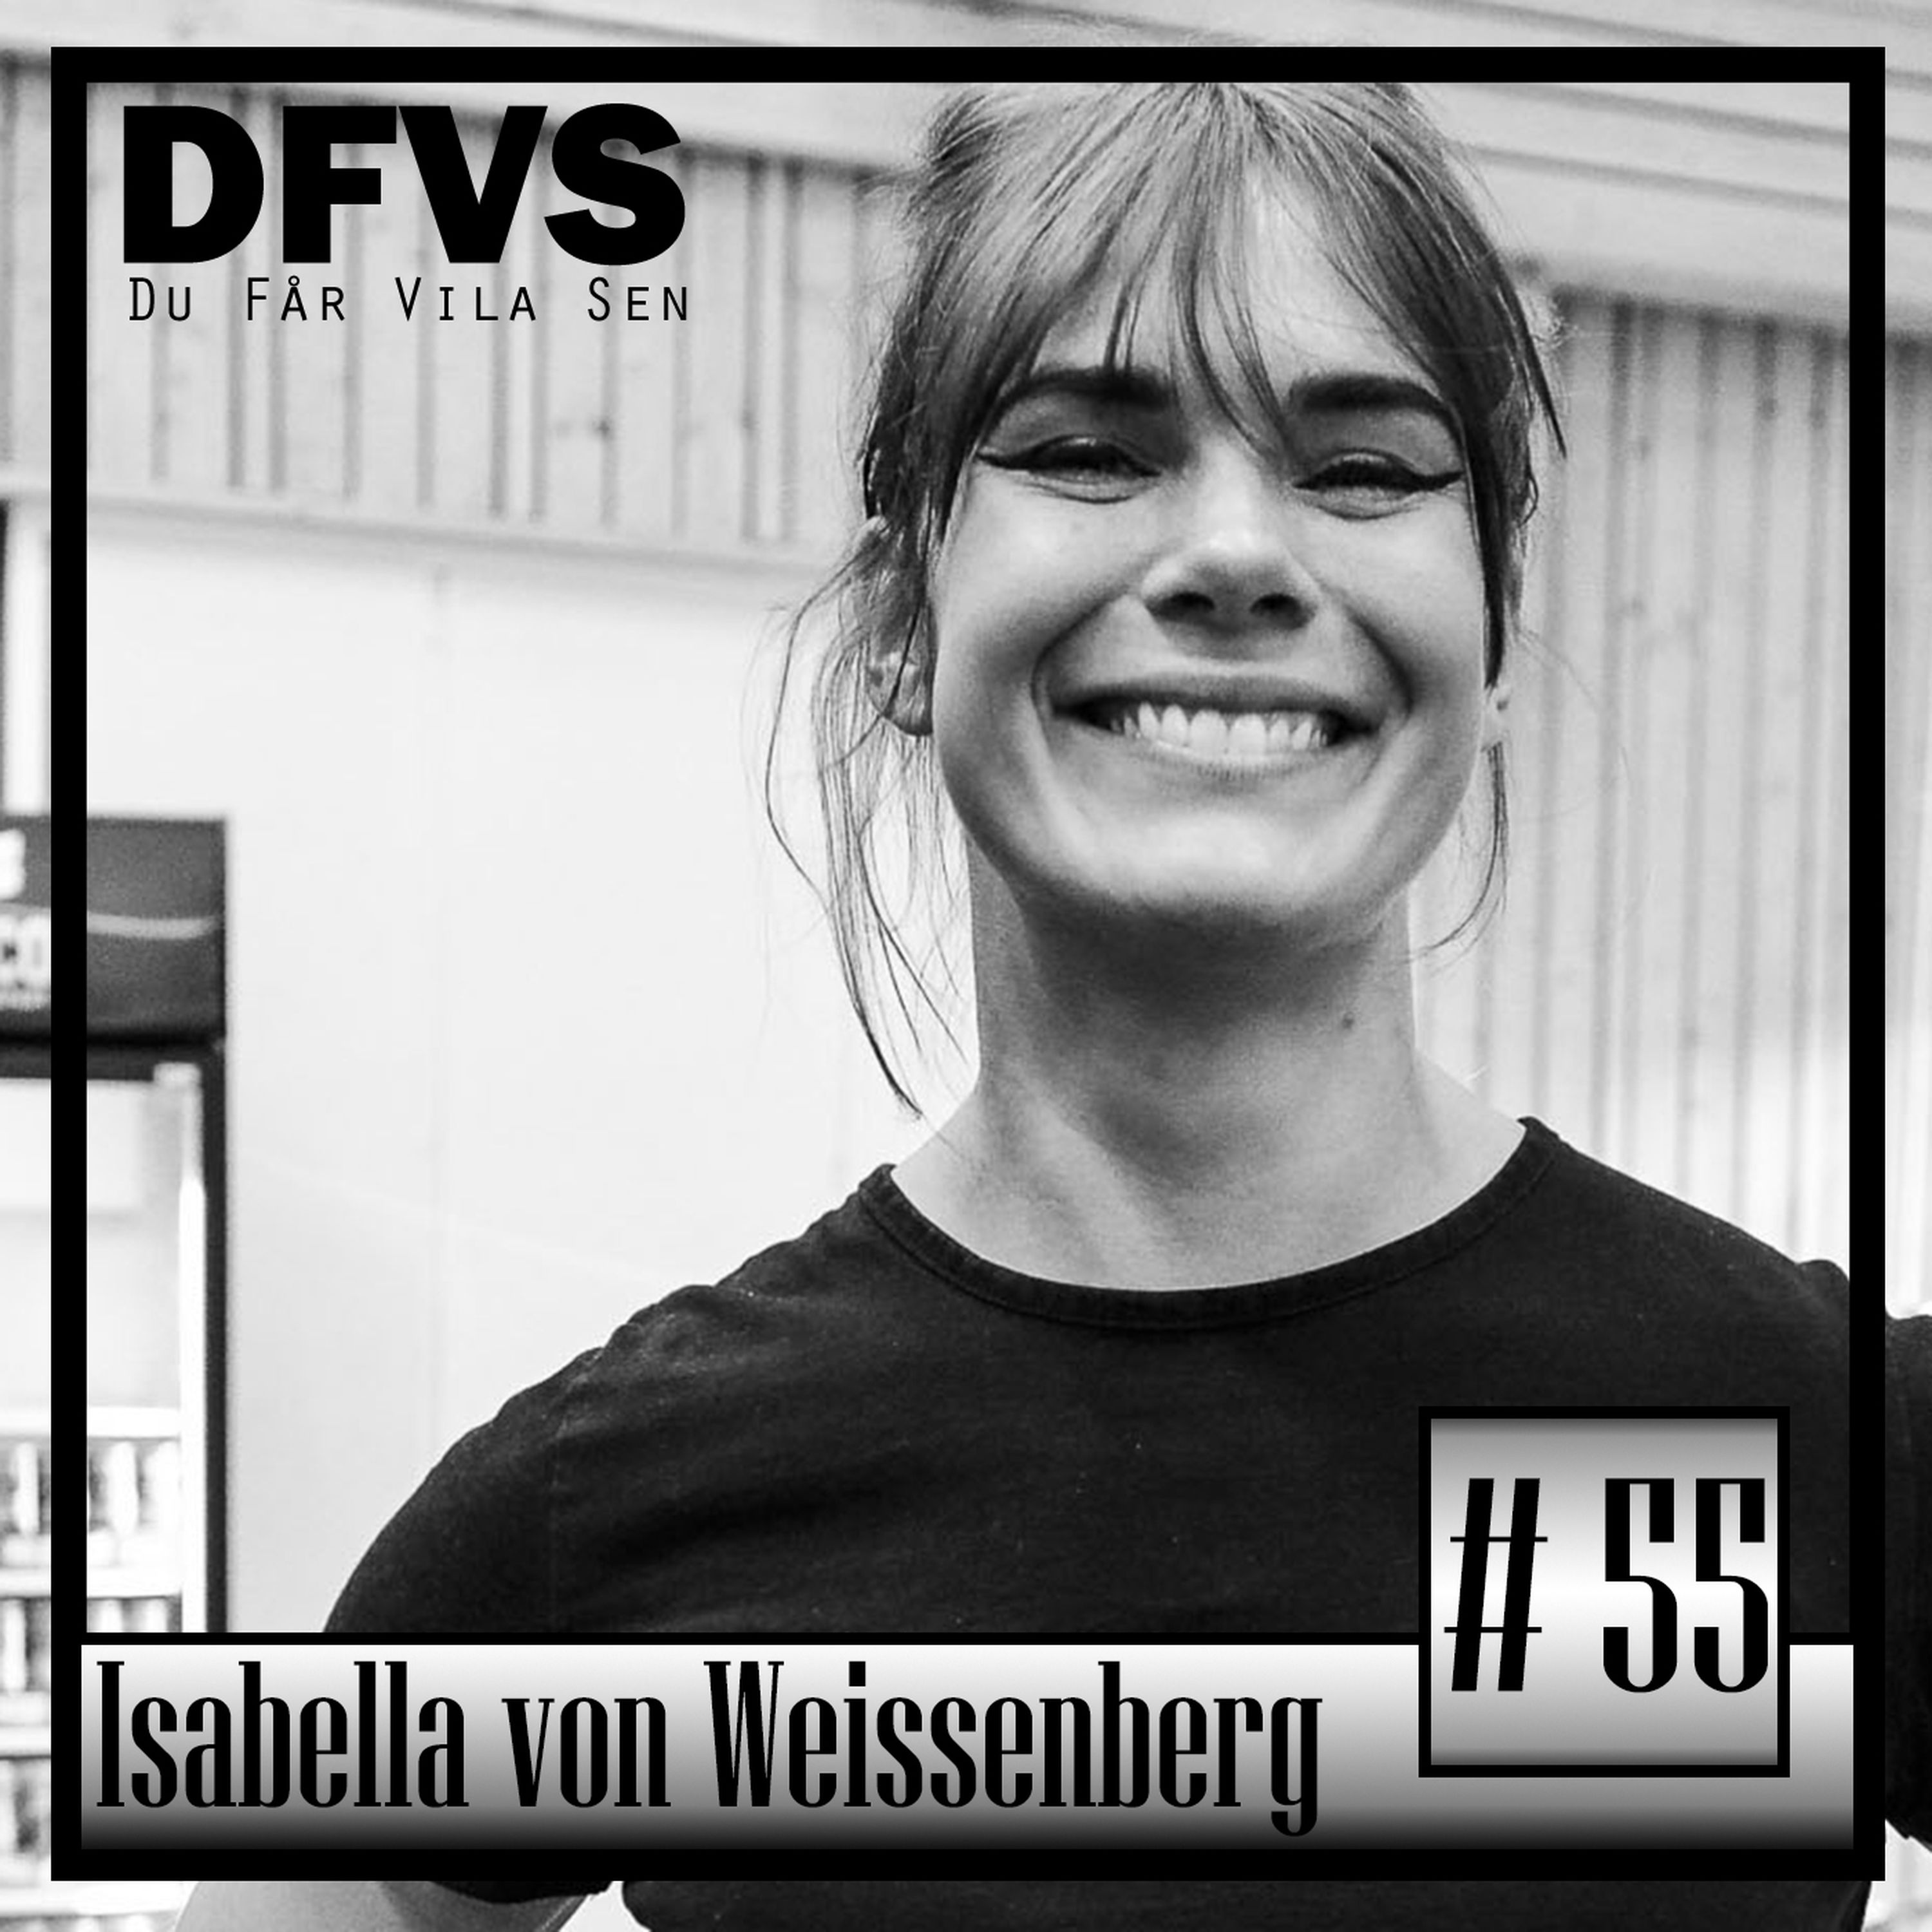 cover art for Avsnitt 55 Isabella von Weissenberg